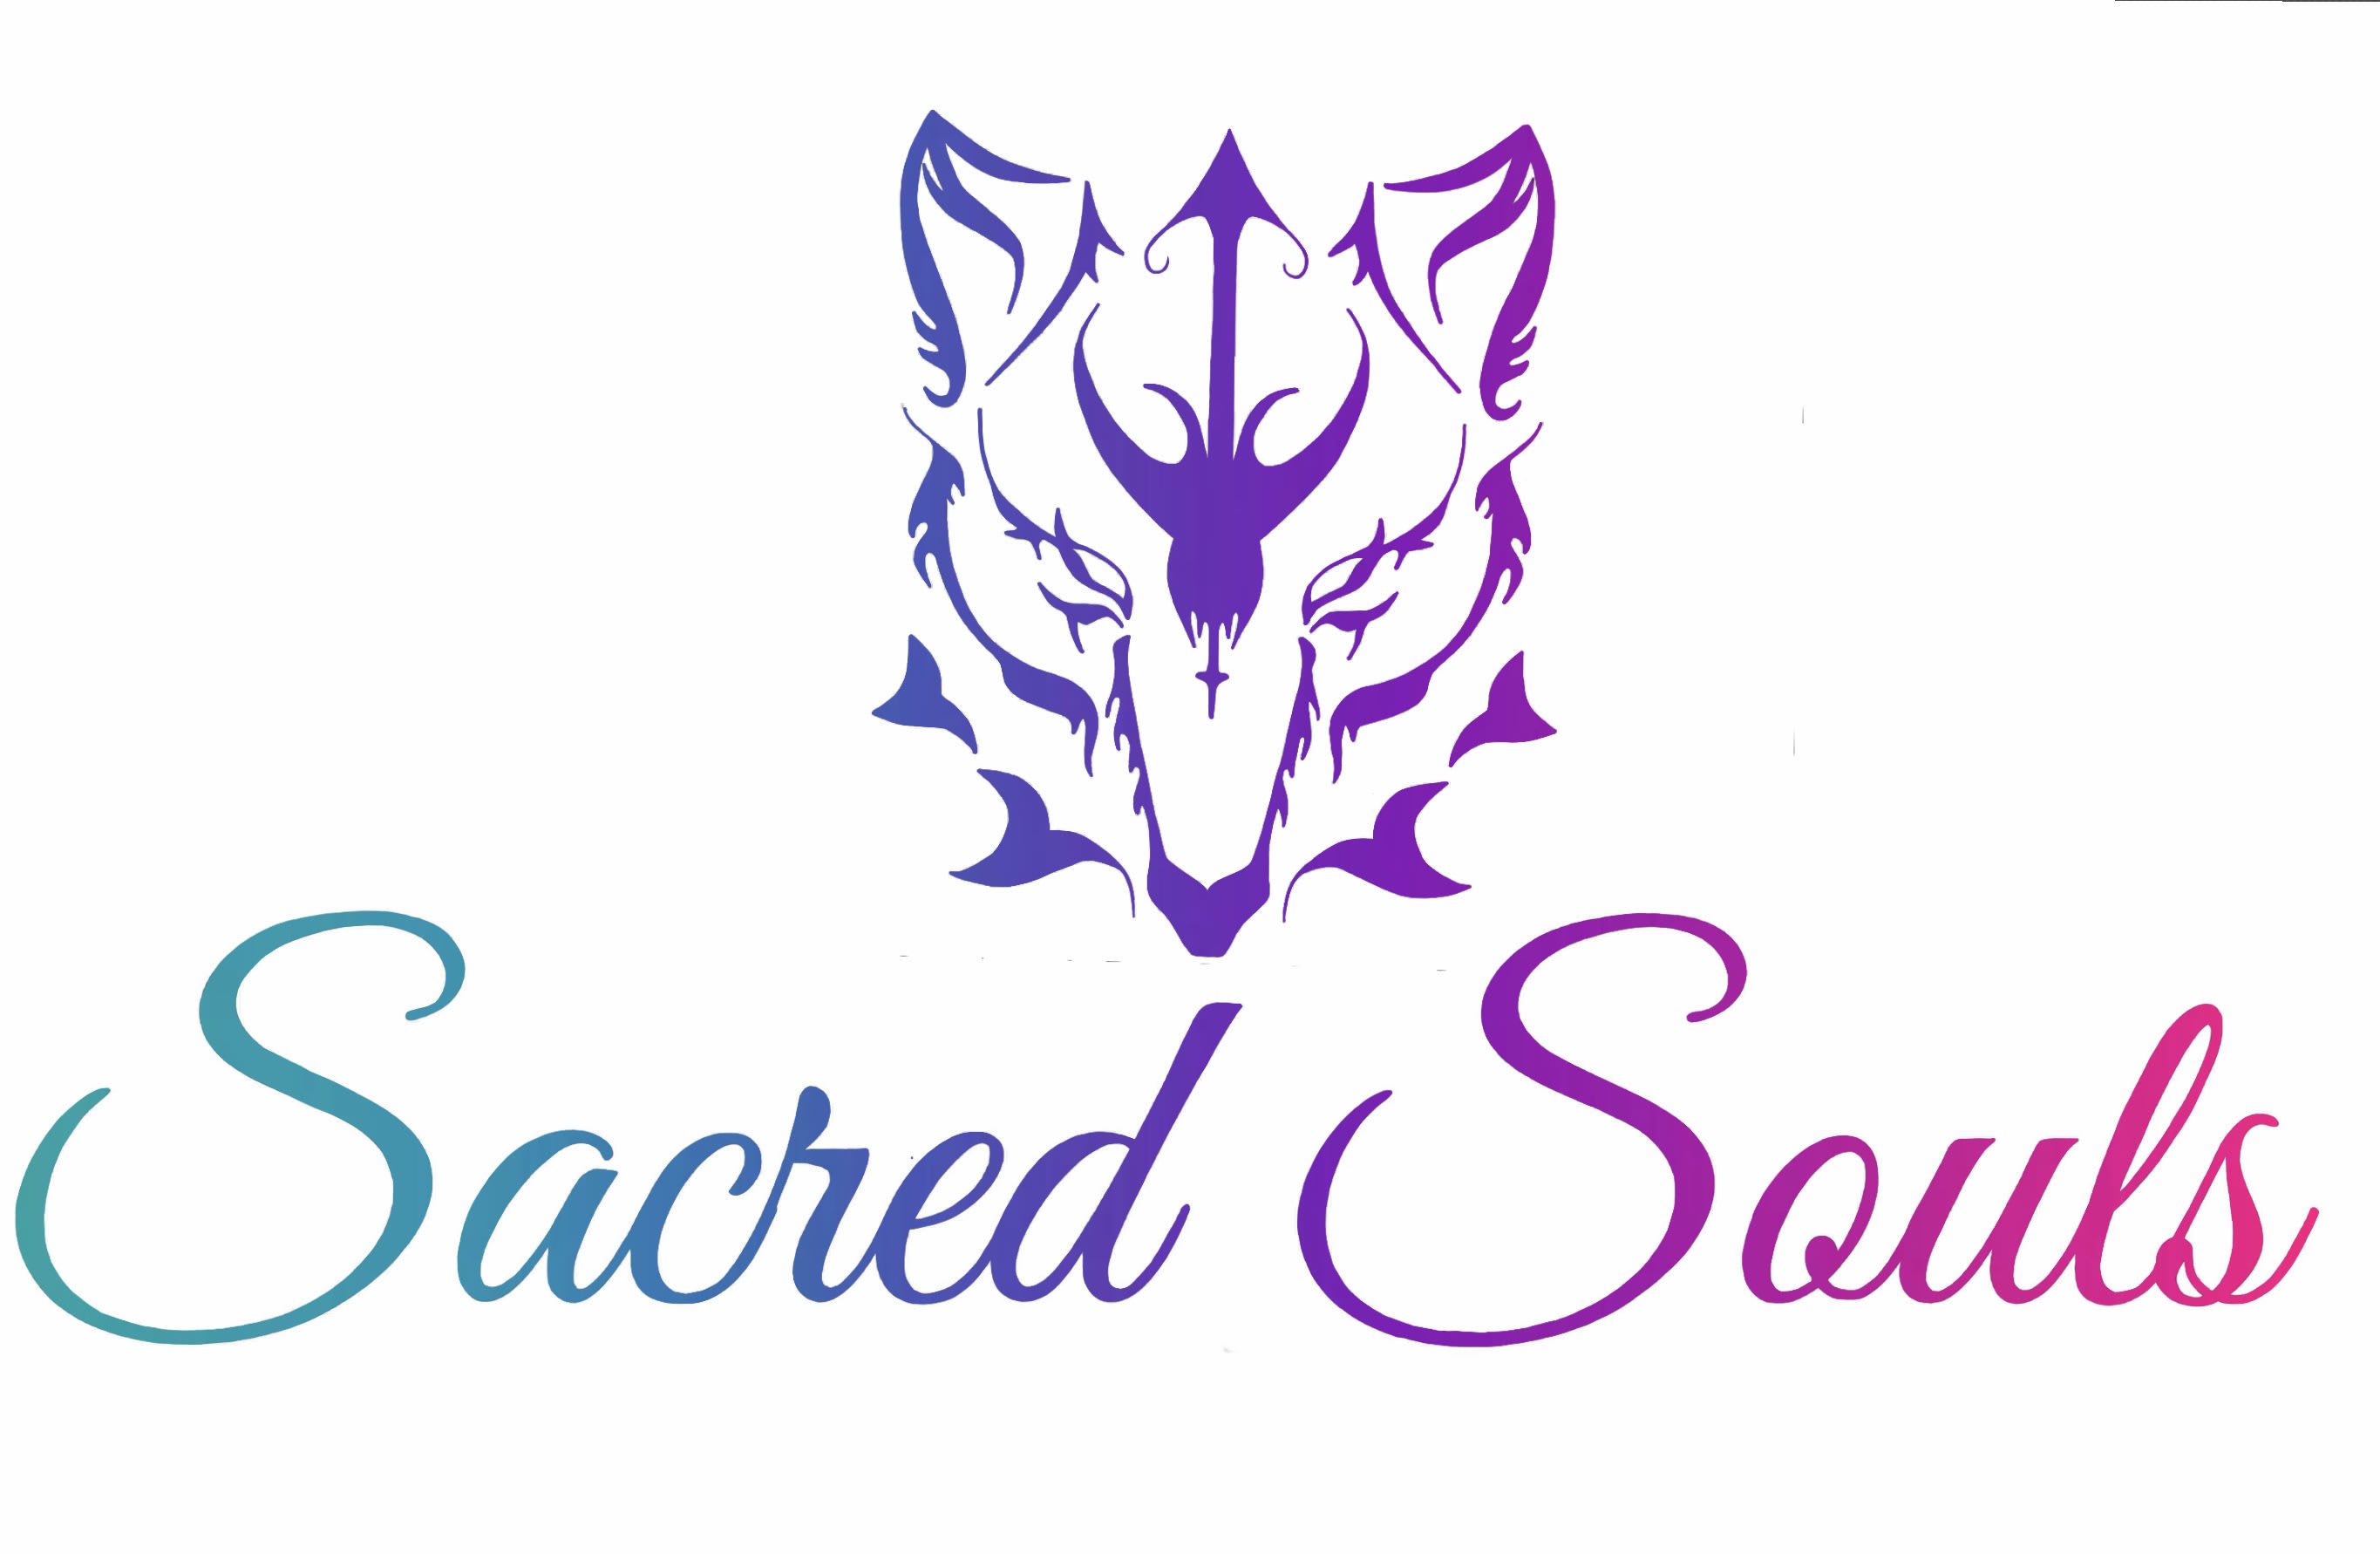 Sacred Souls